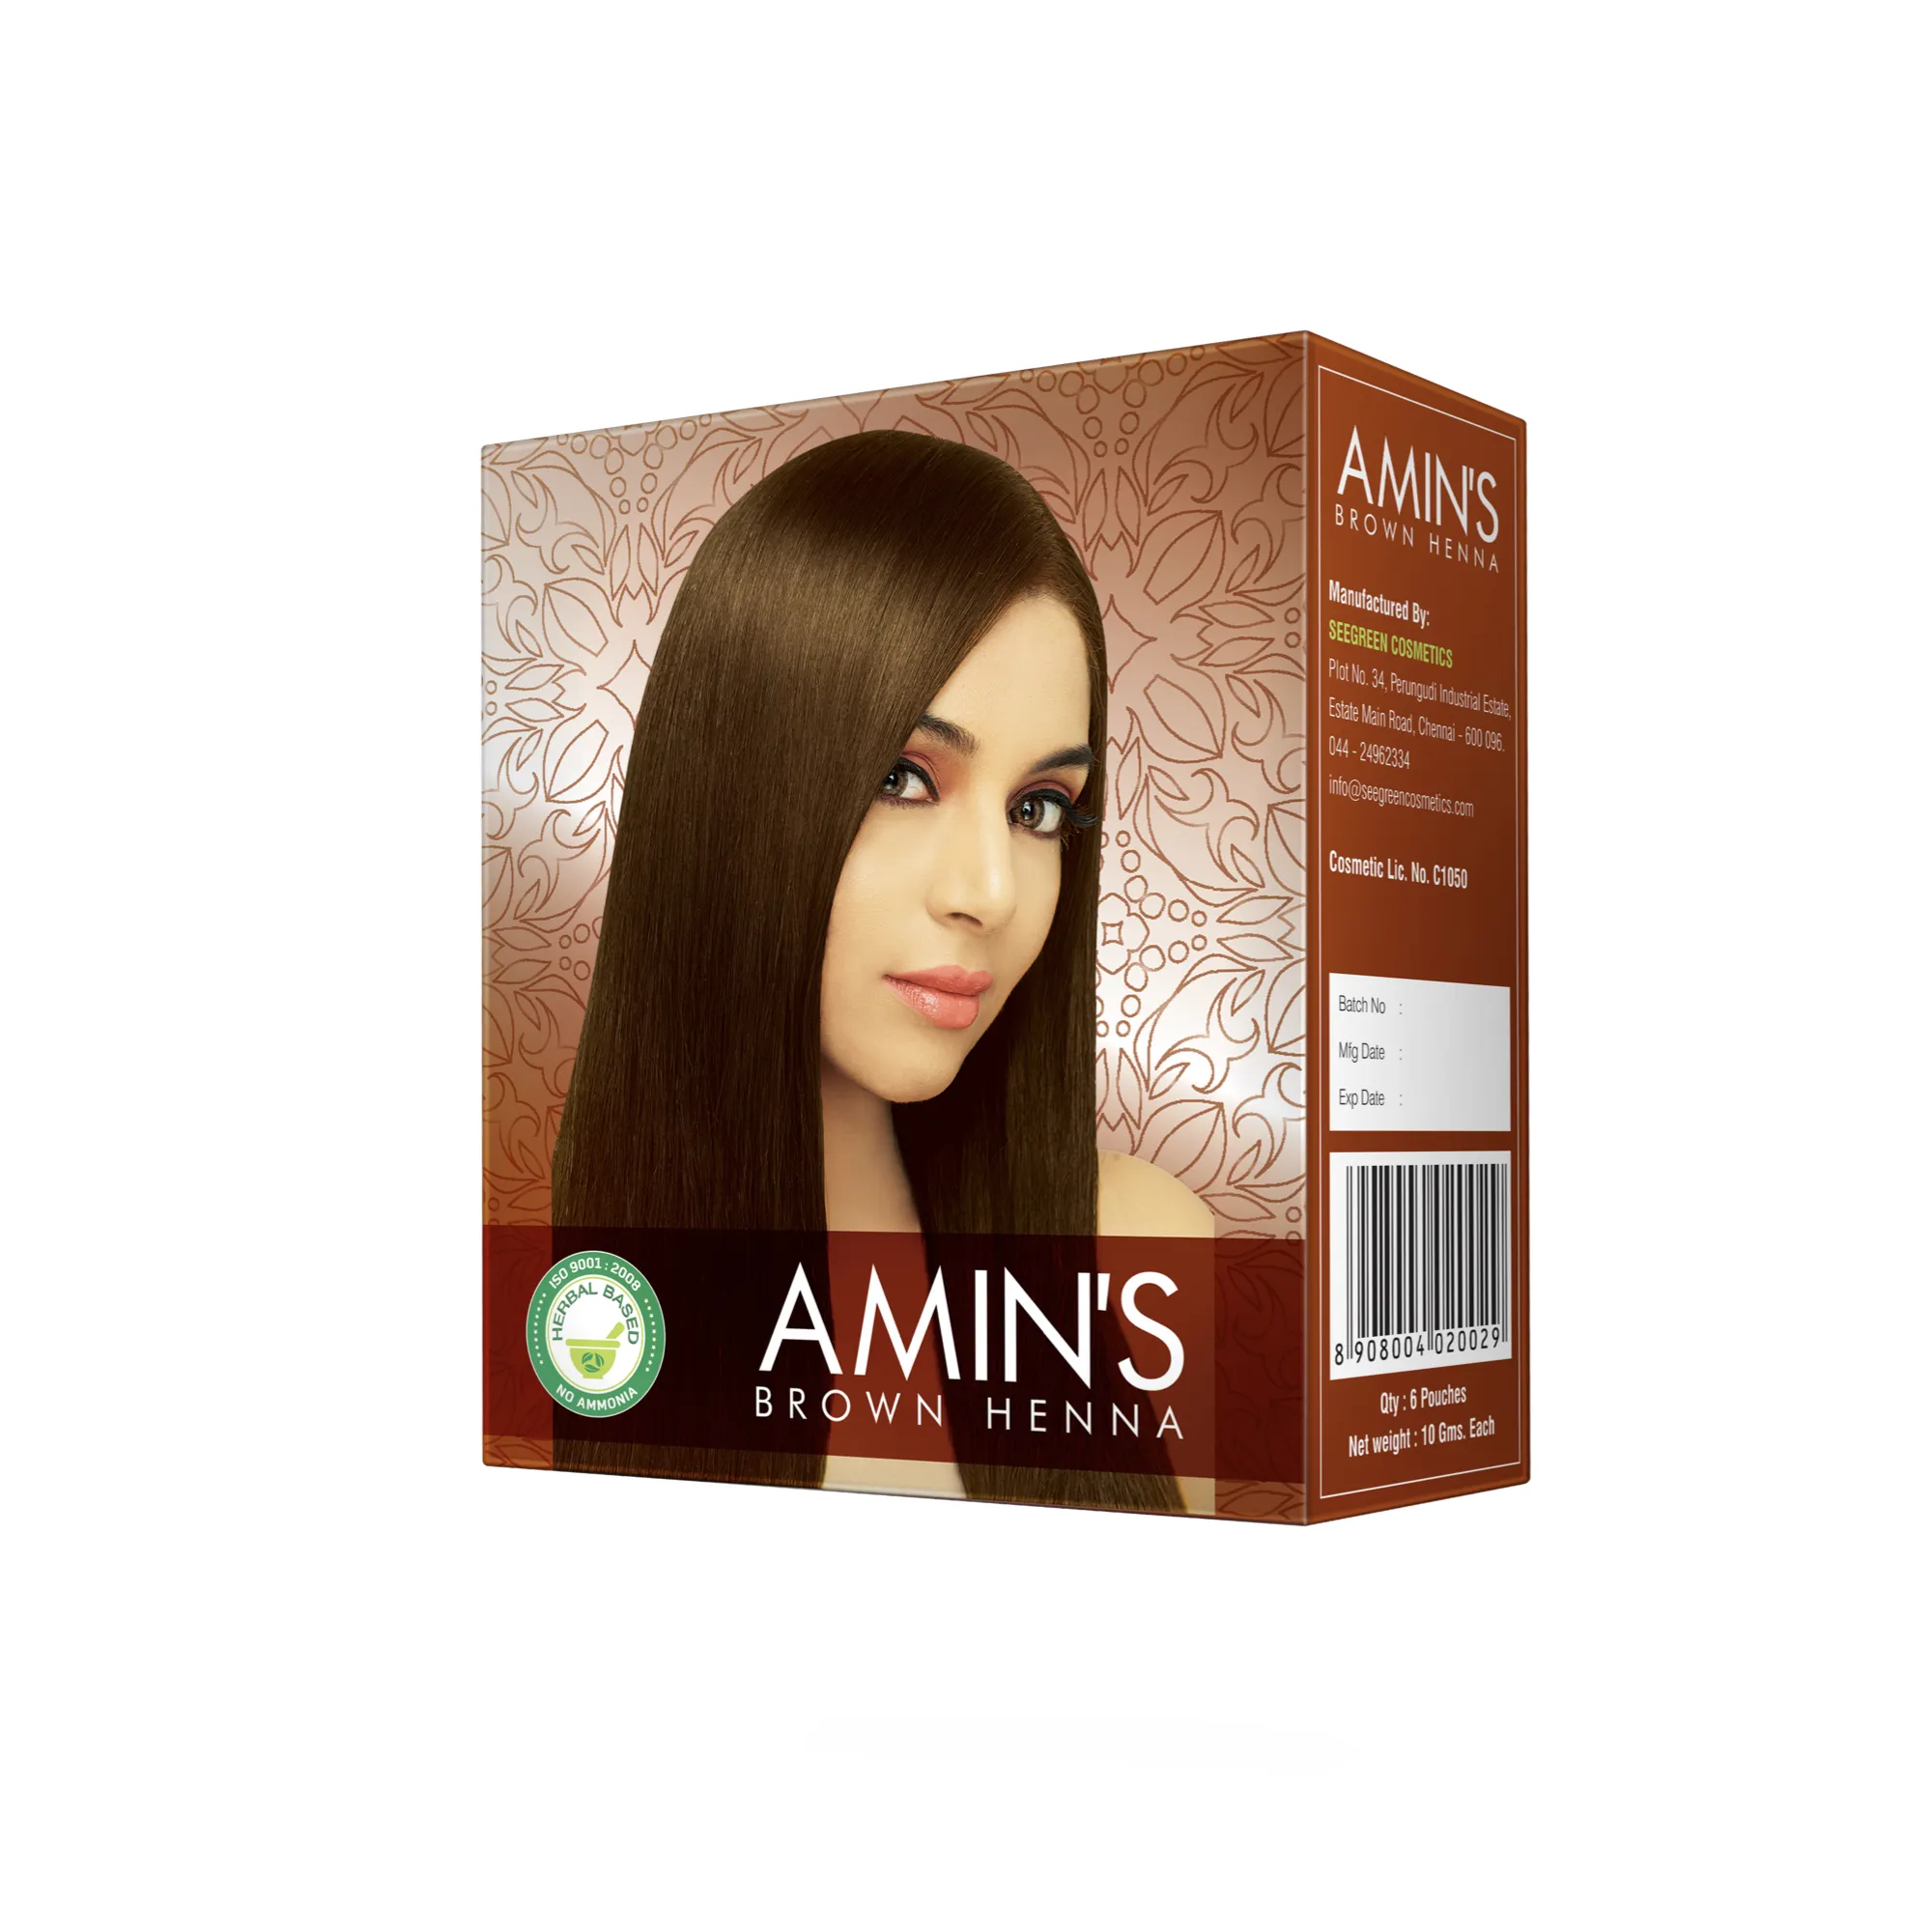 Amin's Brown Henna Hair Dye Powder Salon Professional 100% Gray Coverage